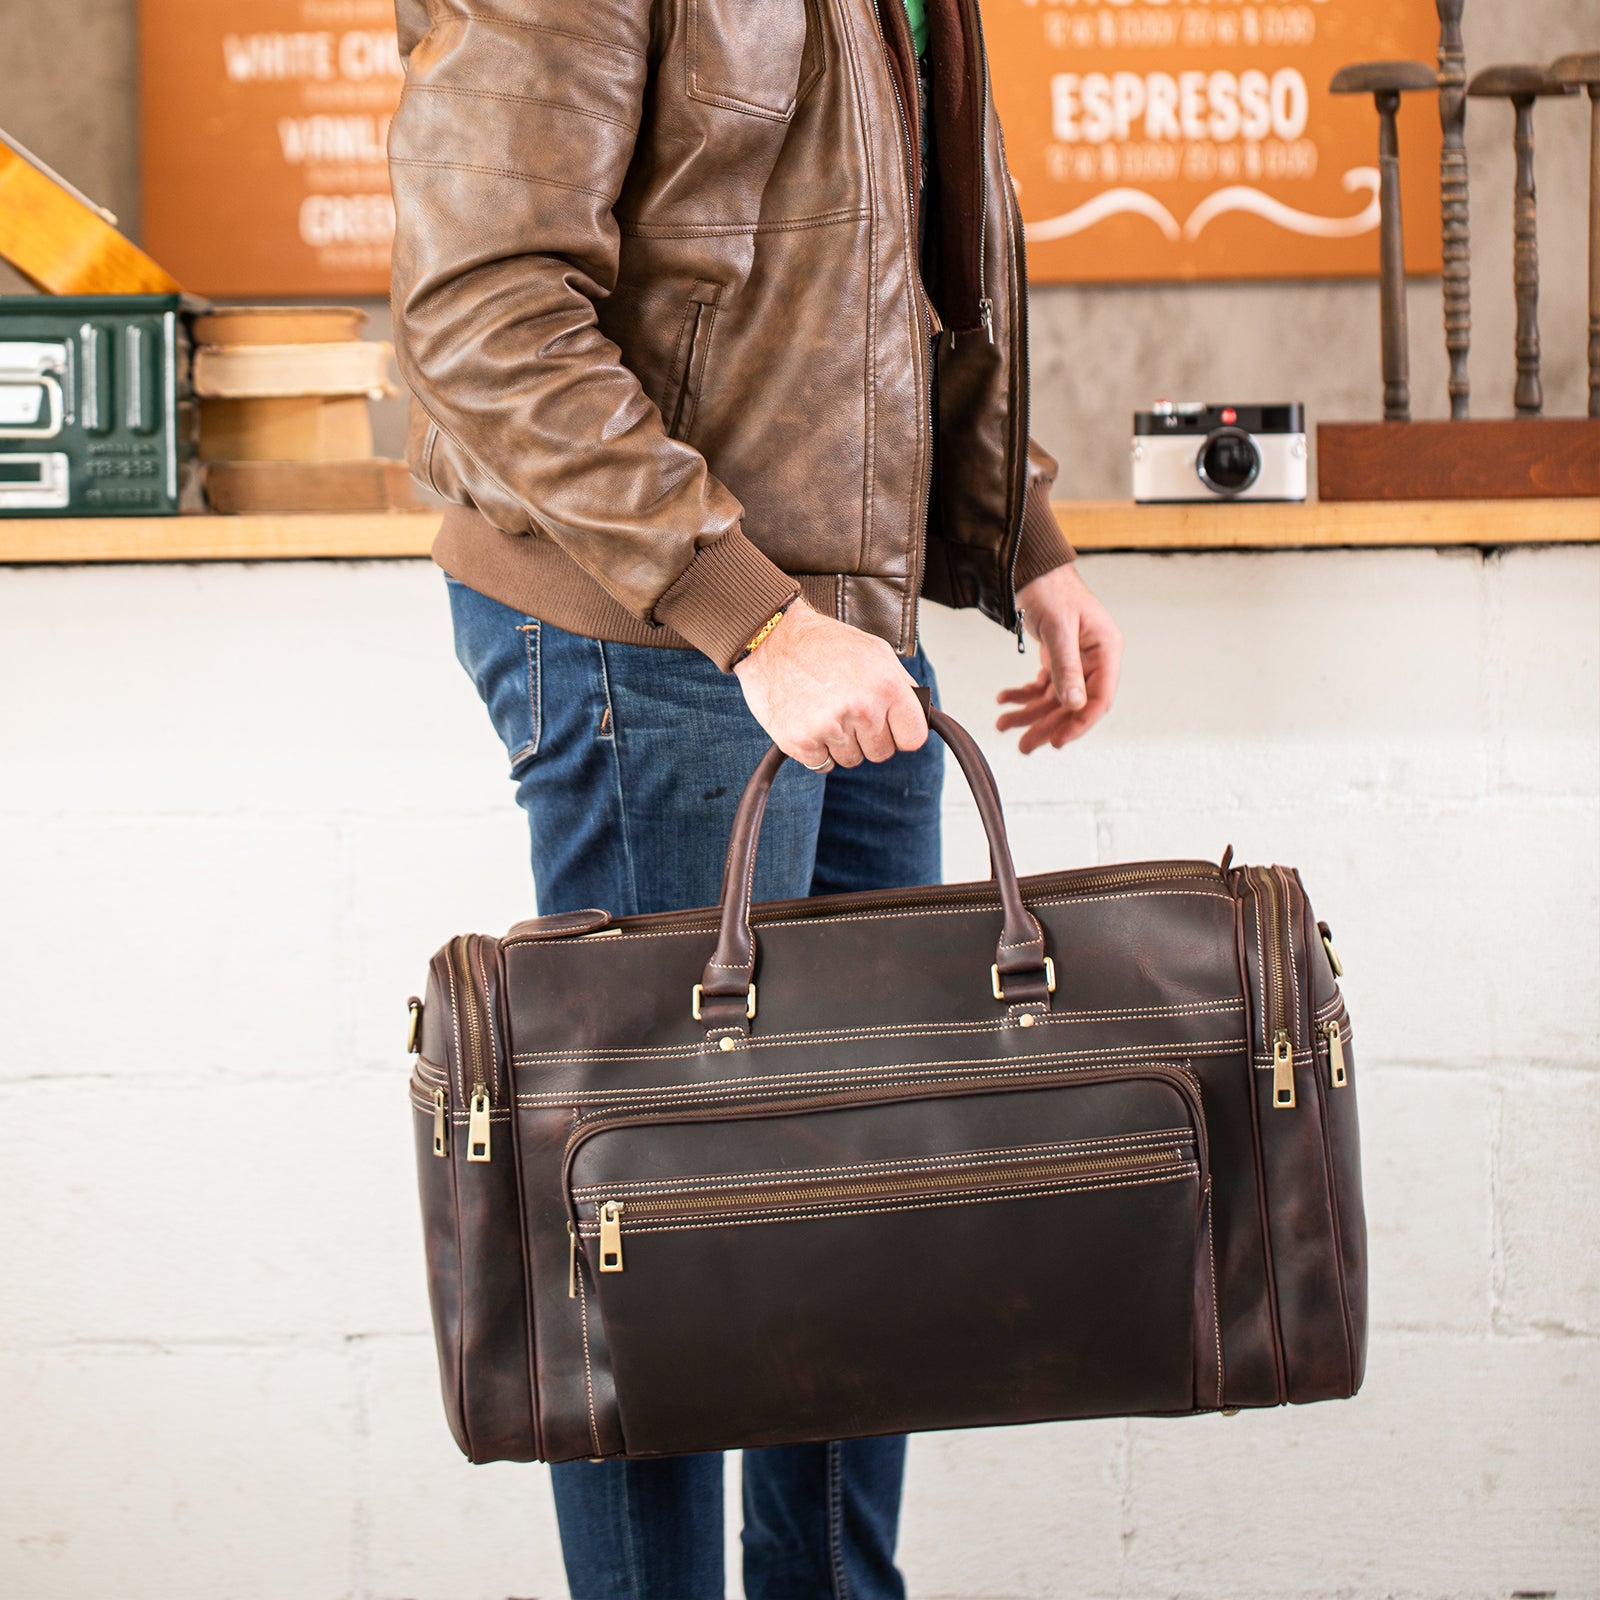 Polare 23.6" Retro Full Grain Leather Duffel Weekender Travel Bag (Dark Brown,Model Display)